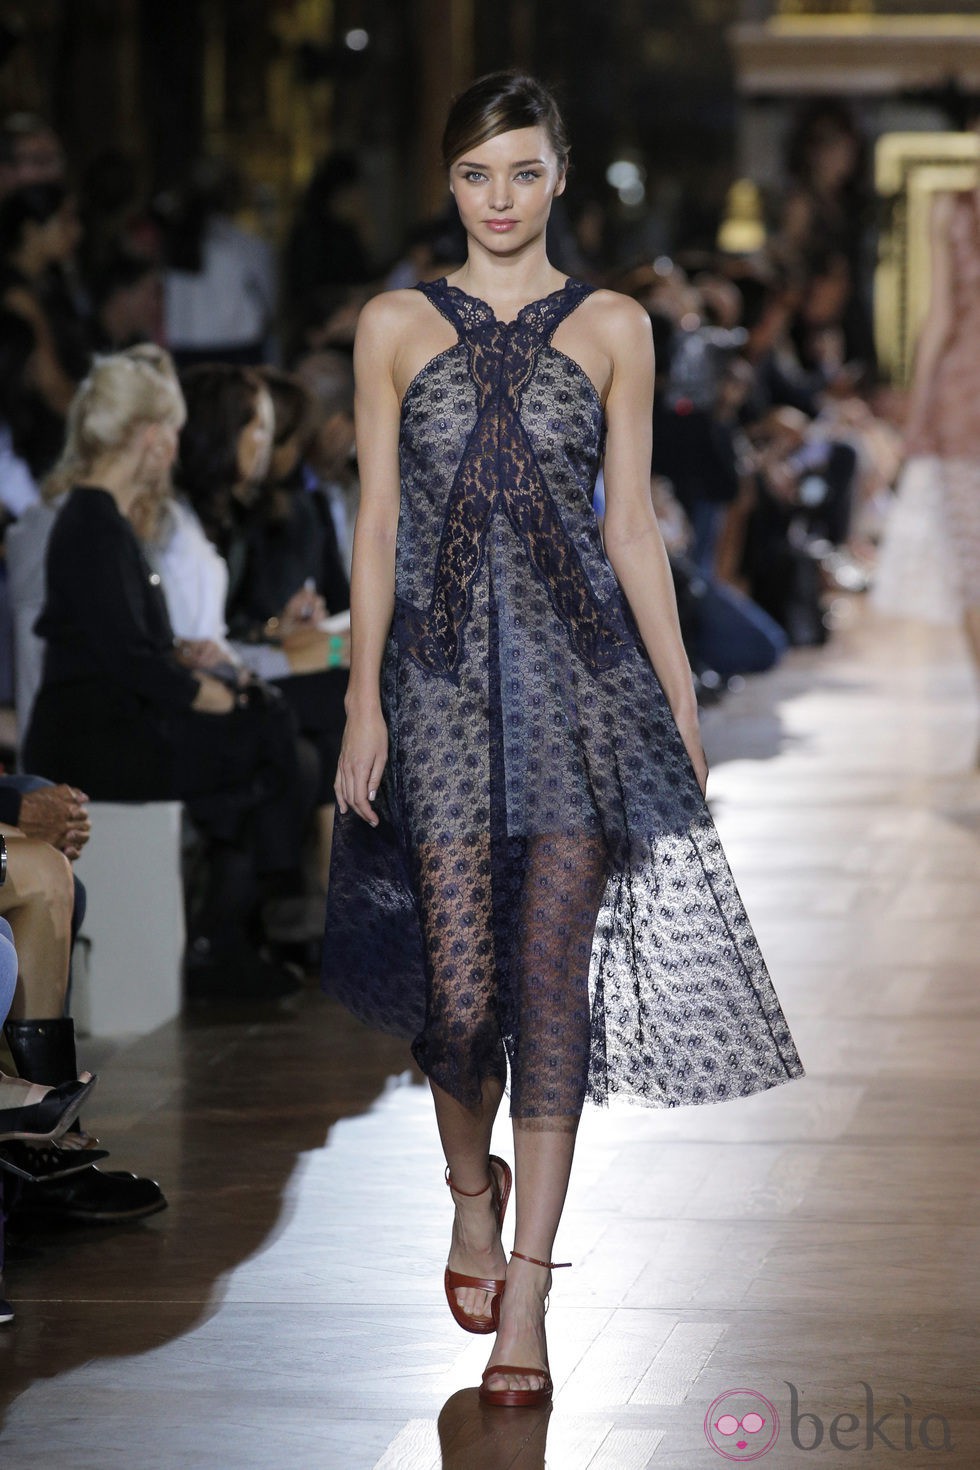 Miranda Kerr desfila para Stella McCartney en la Fashion Week de París